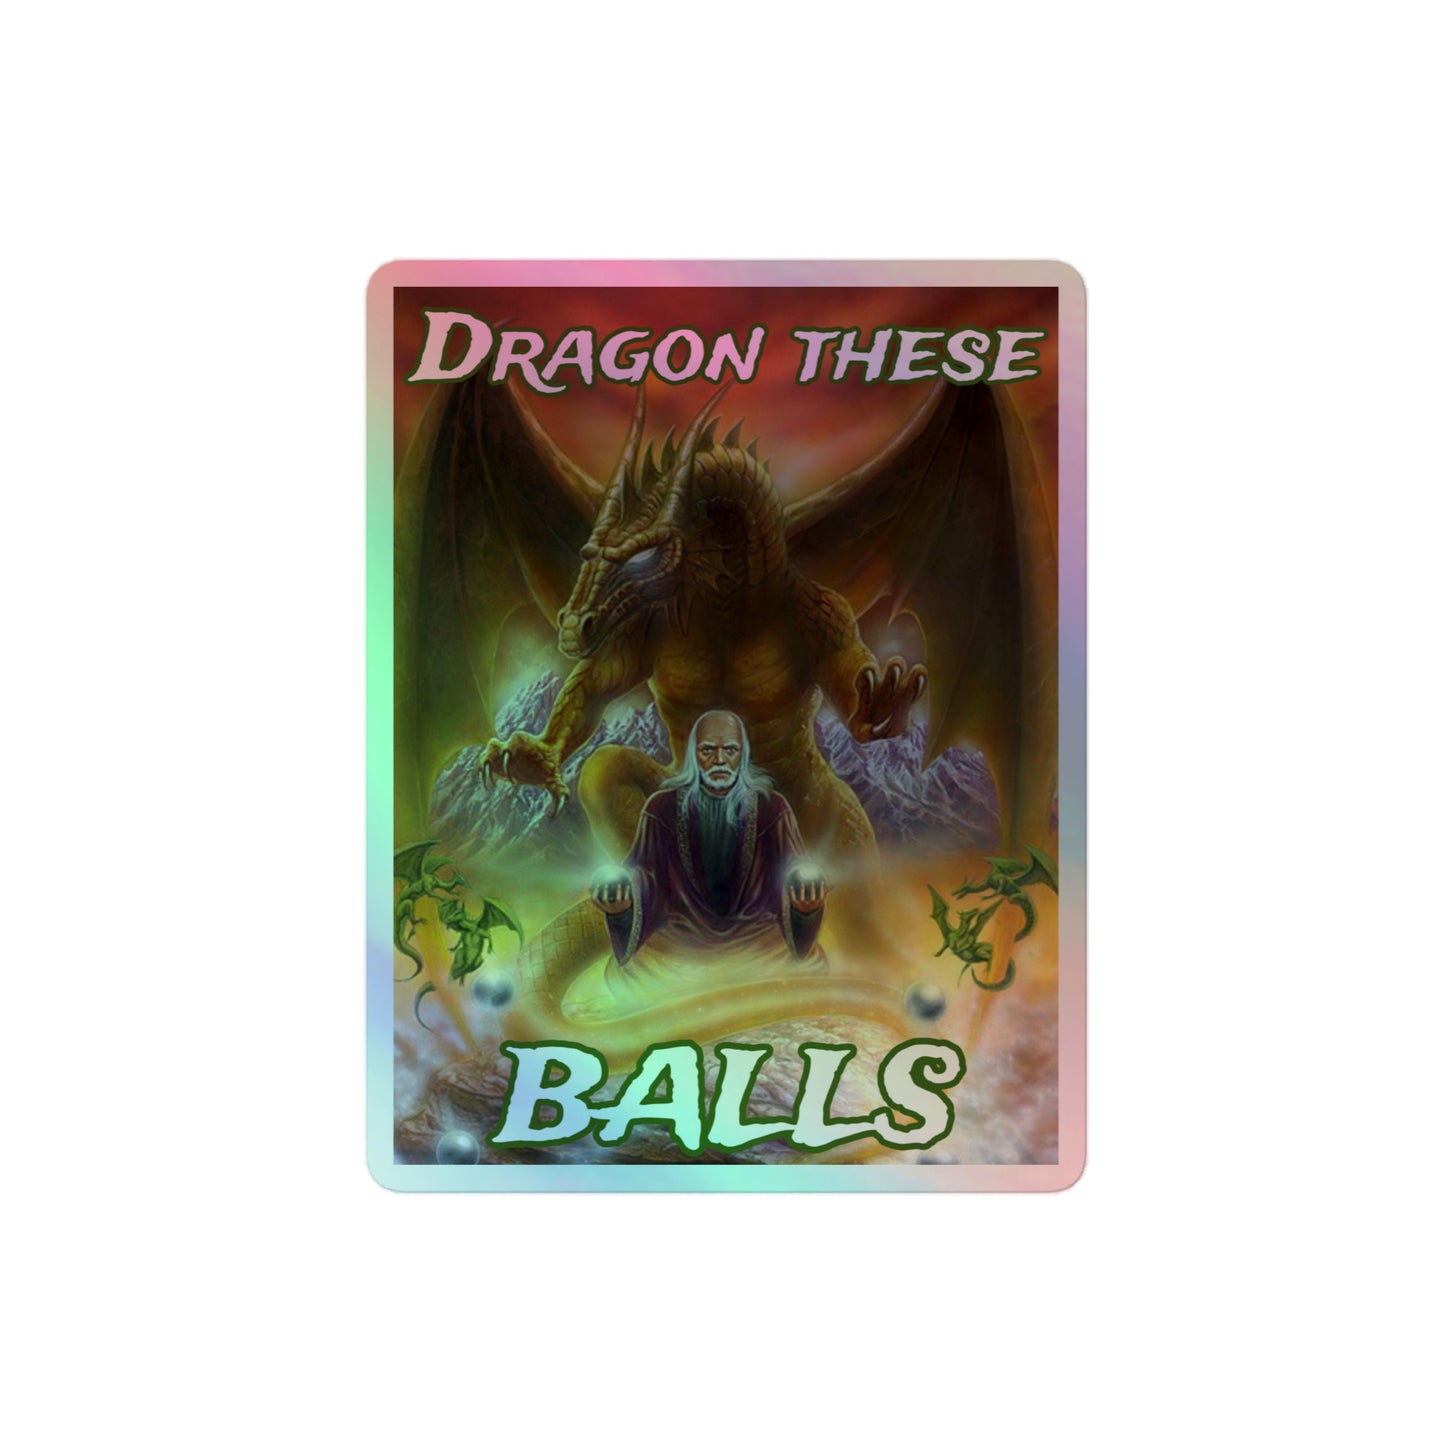 Dragon these balls